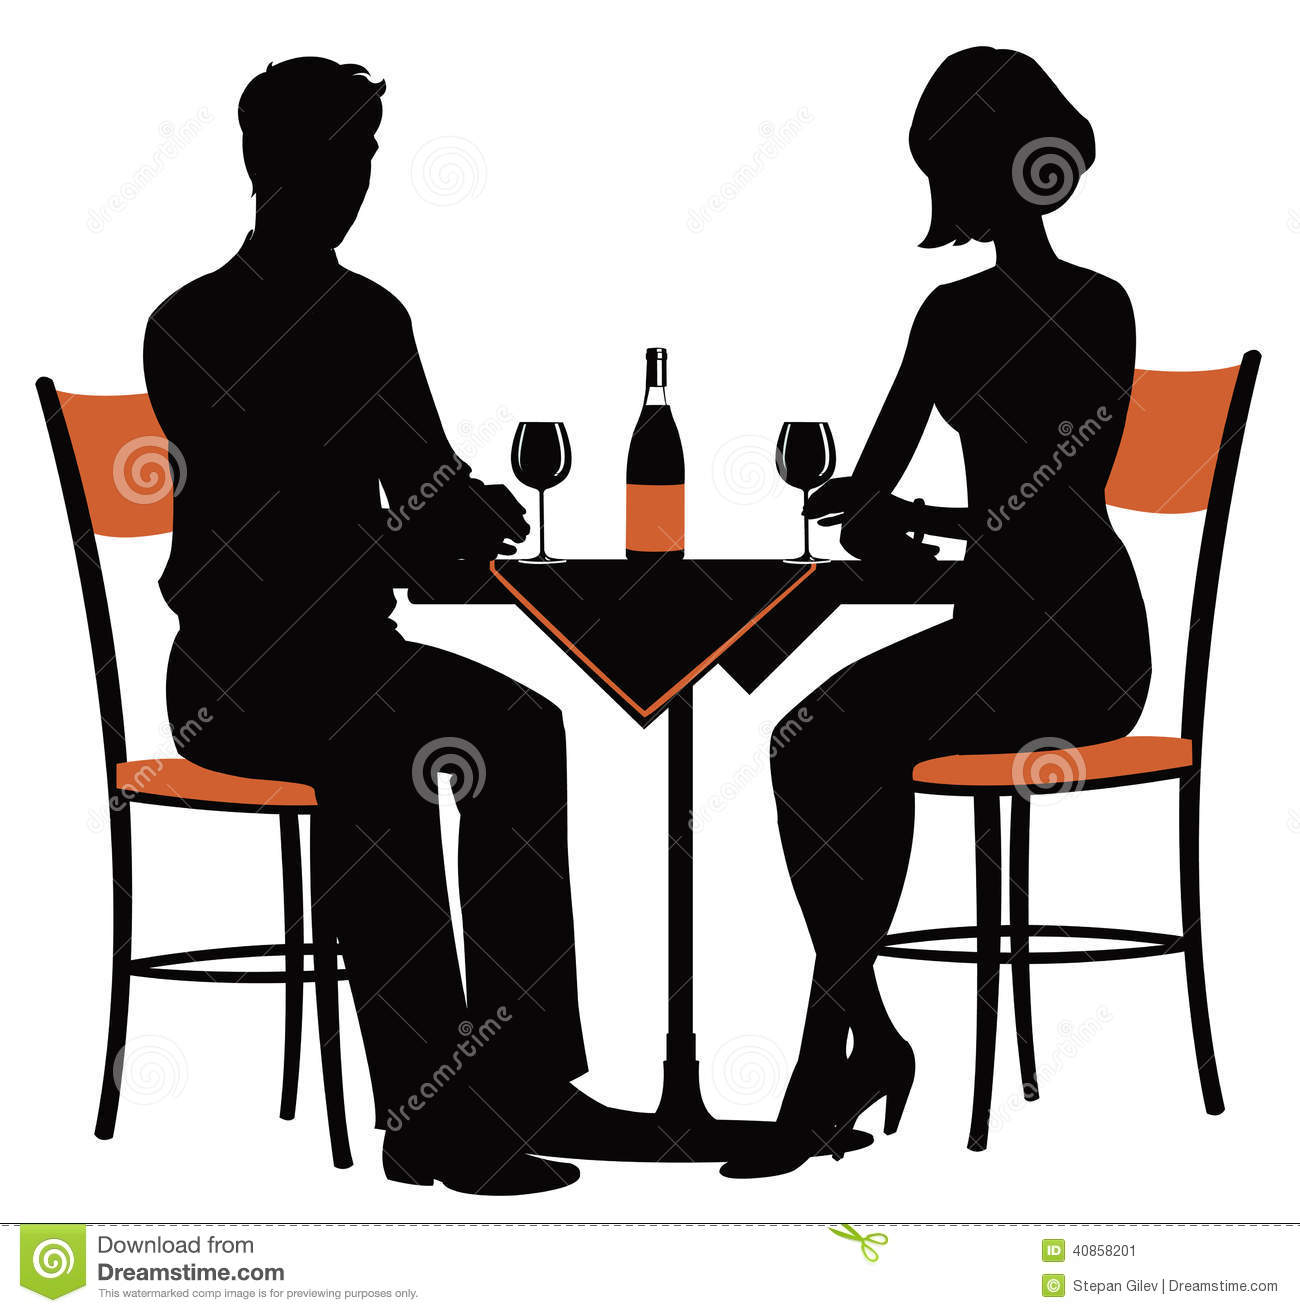 Romantic dinner date.